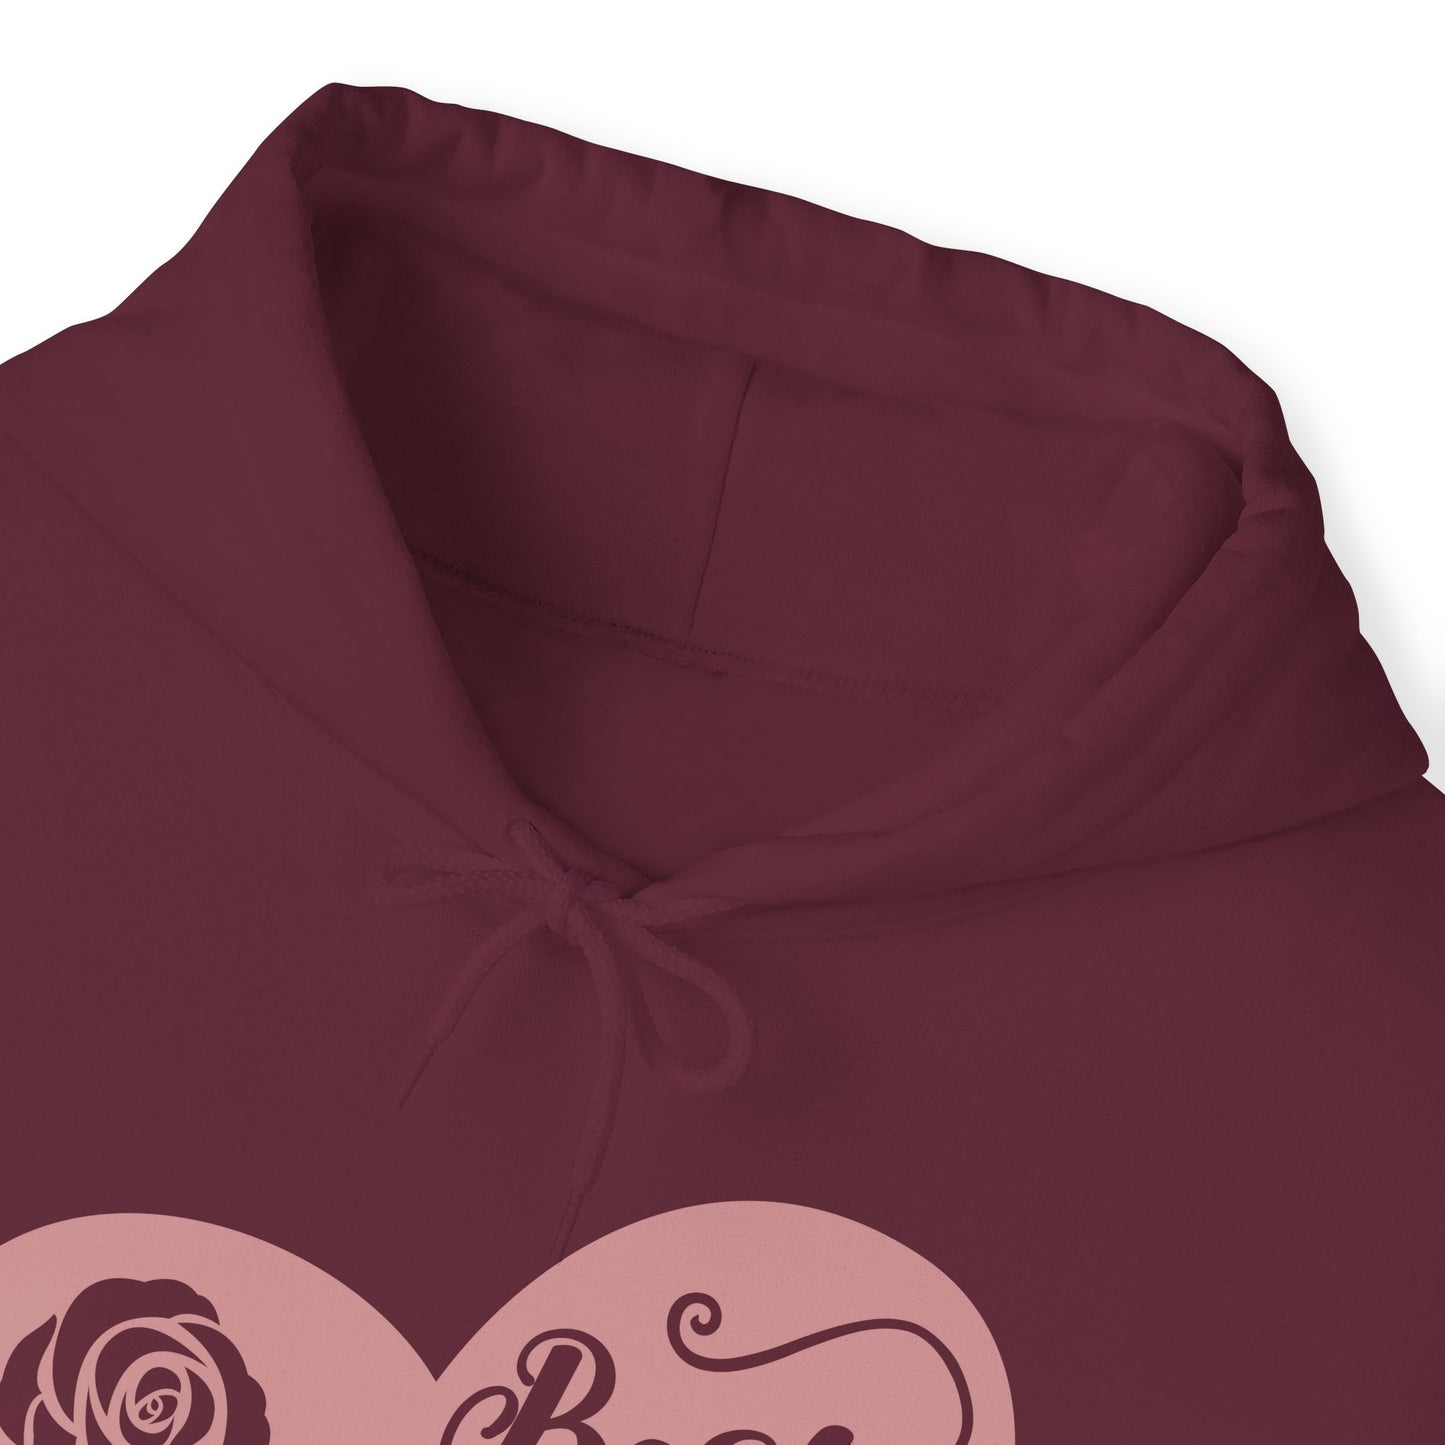 Best Mama Ever - Unisex Heavy Blend™ Hooded Sweatshirt